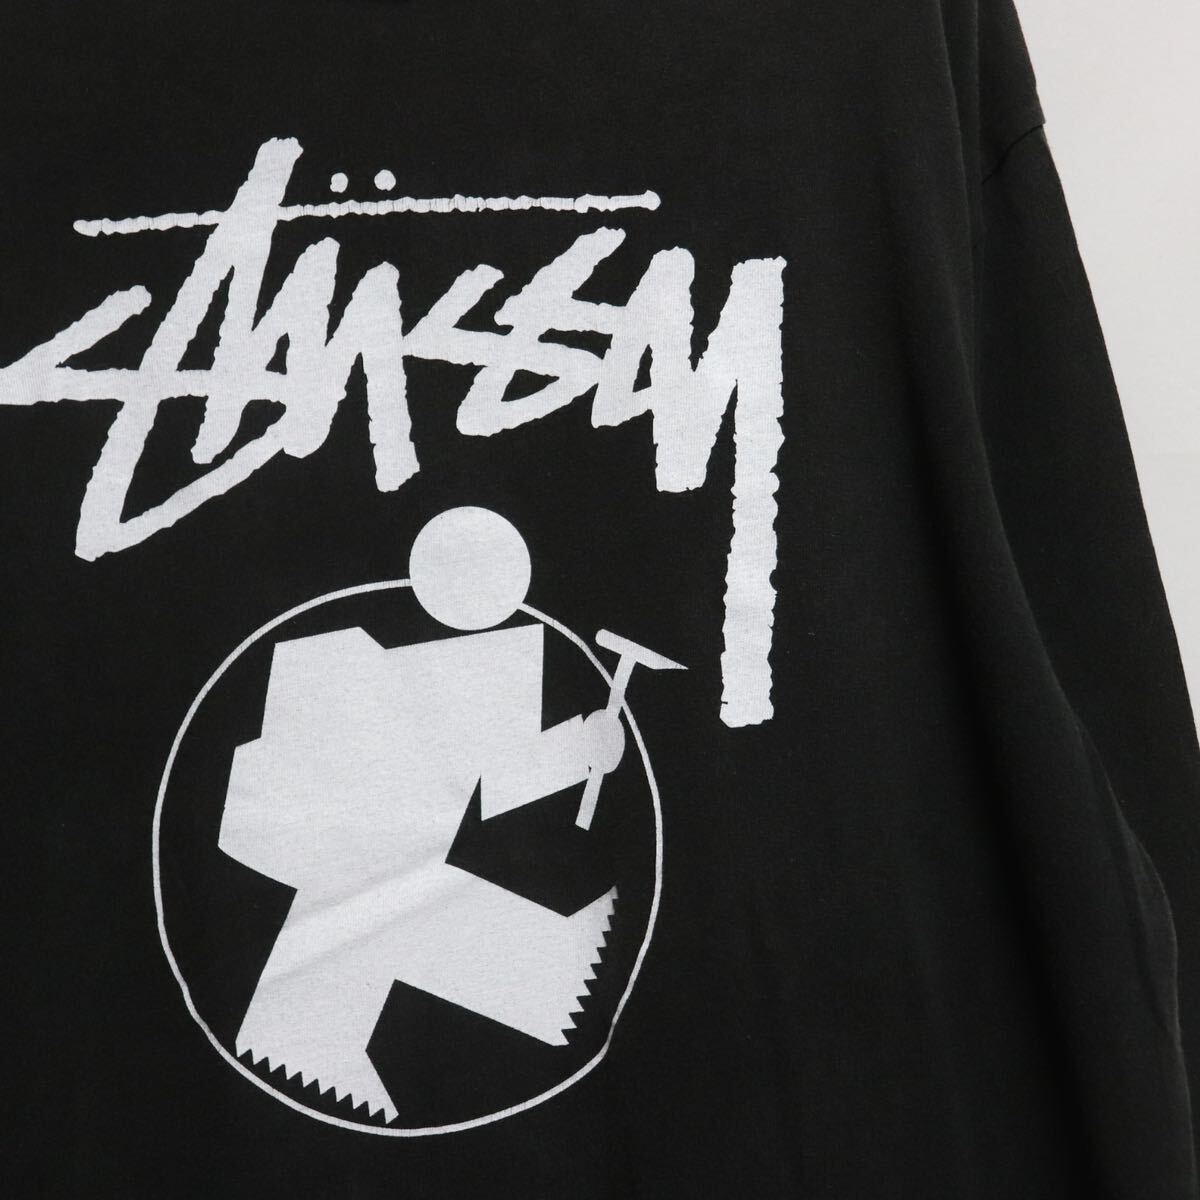  редкий [stussy] Logo трикотажный джемпер с длинным рукавом футболка / Stussy тень man 